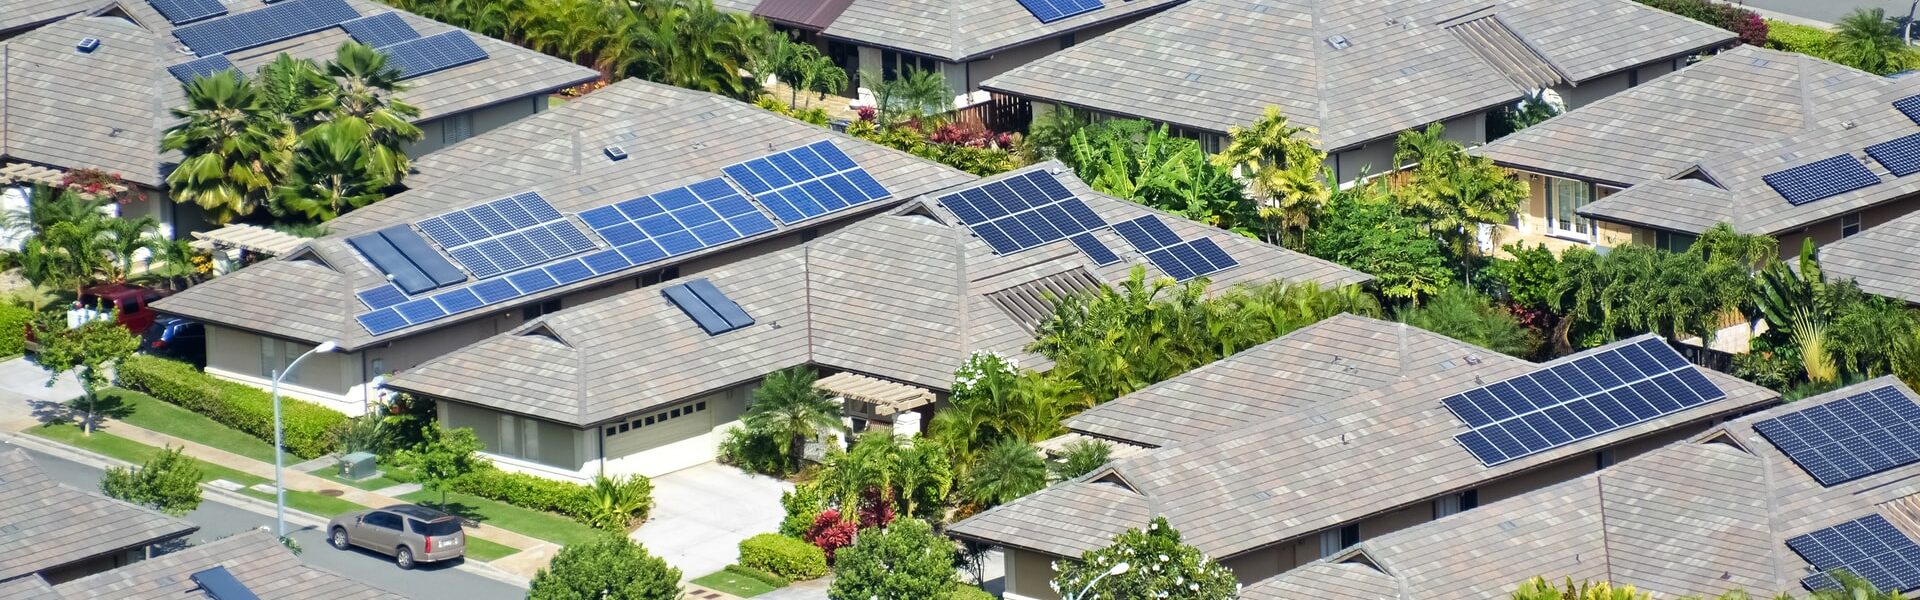 energia solar residencial - Simulador Solar: saiba quanto custa um sistema de energia solar